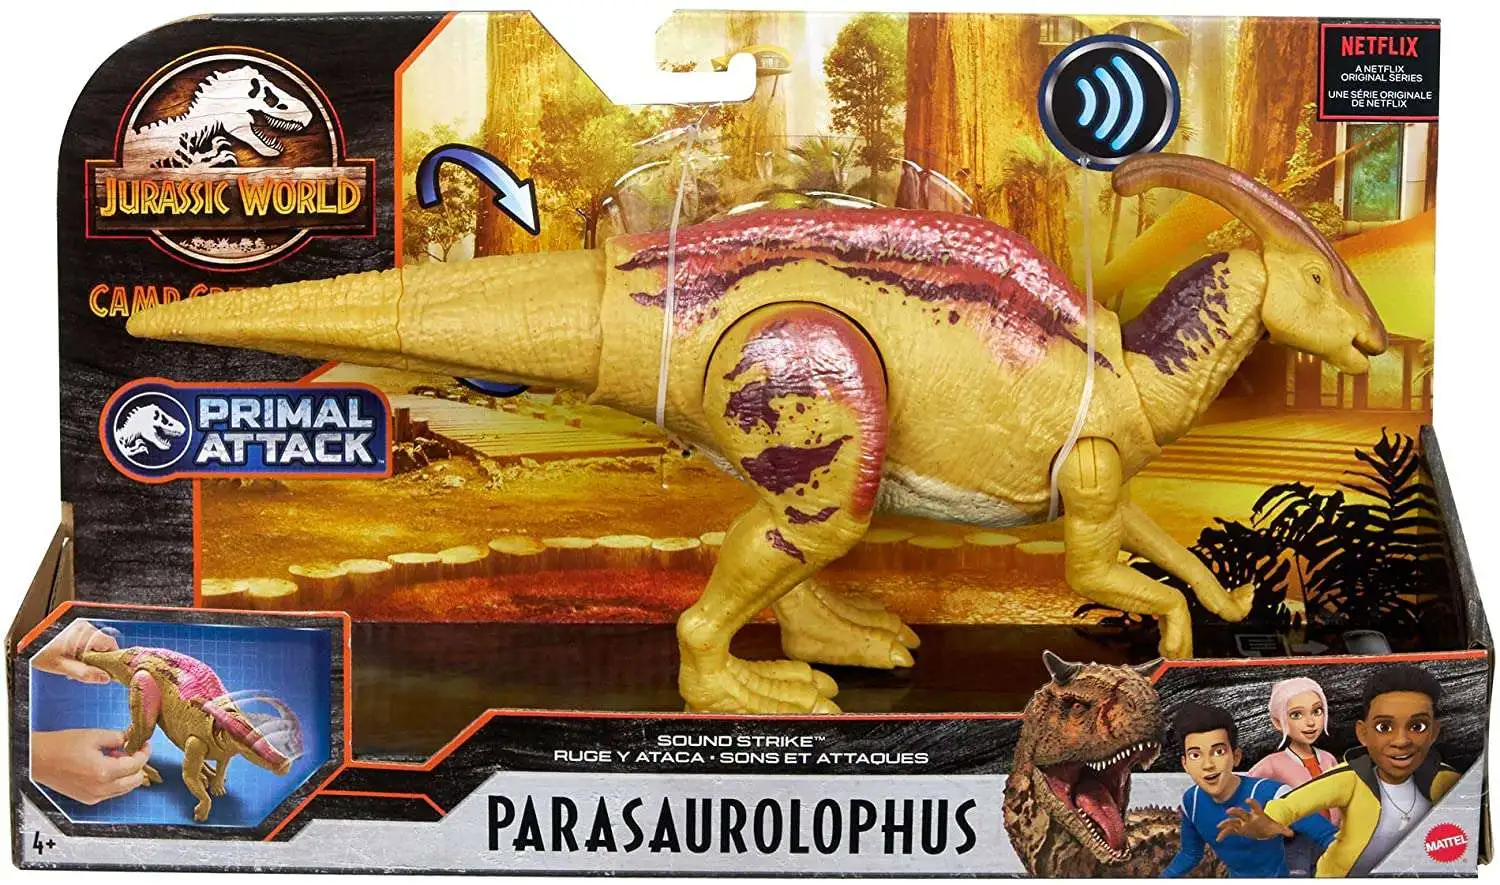 Jurassic World Camp Cretaceous Parasaurolophus Action Figure [Sound Strike]